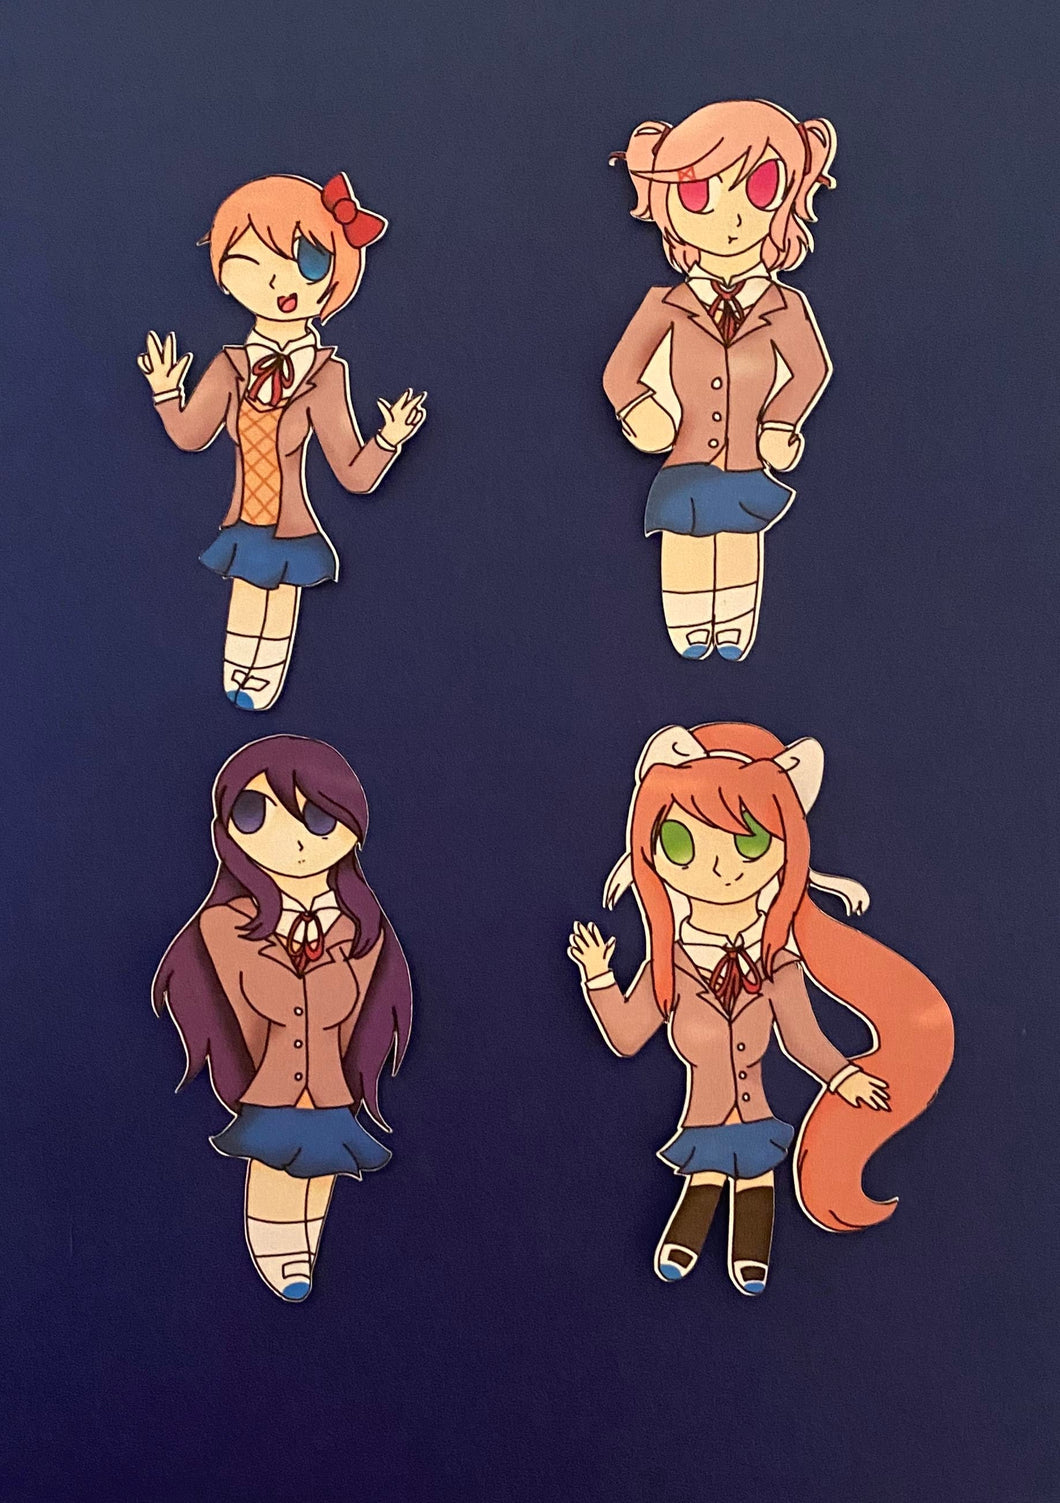 Handmade Doki Doki Literature Club Stickers featuring Monika, Natsuki, Sayori, Yuri!  Original!